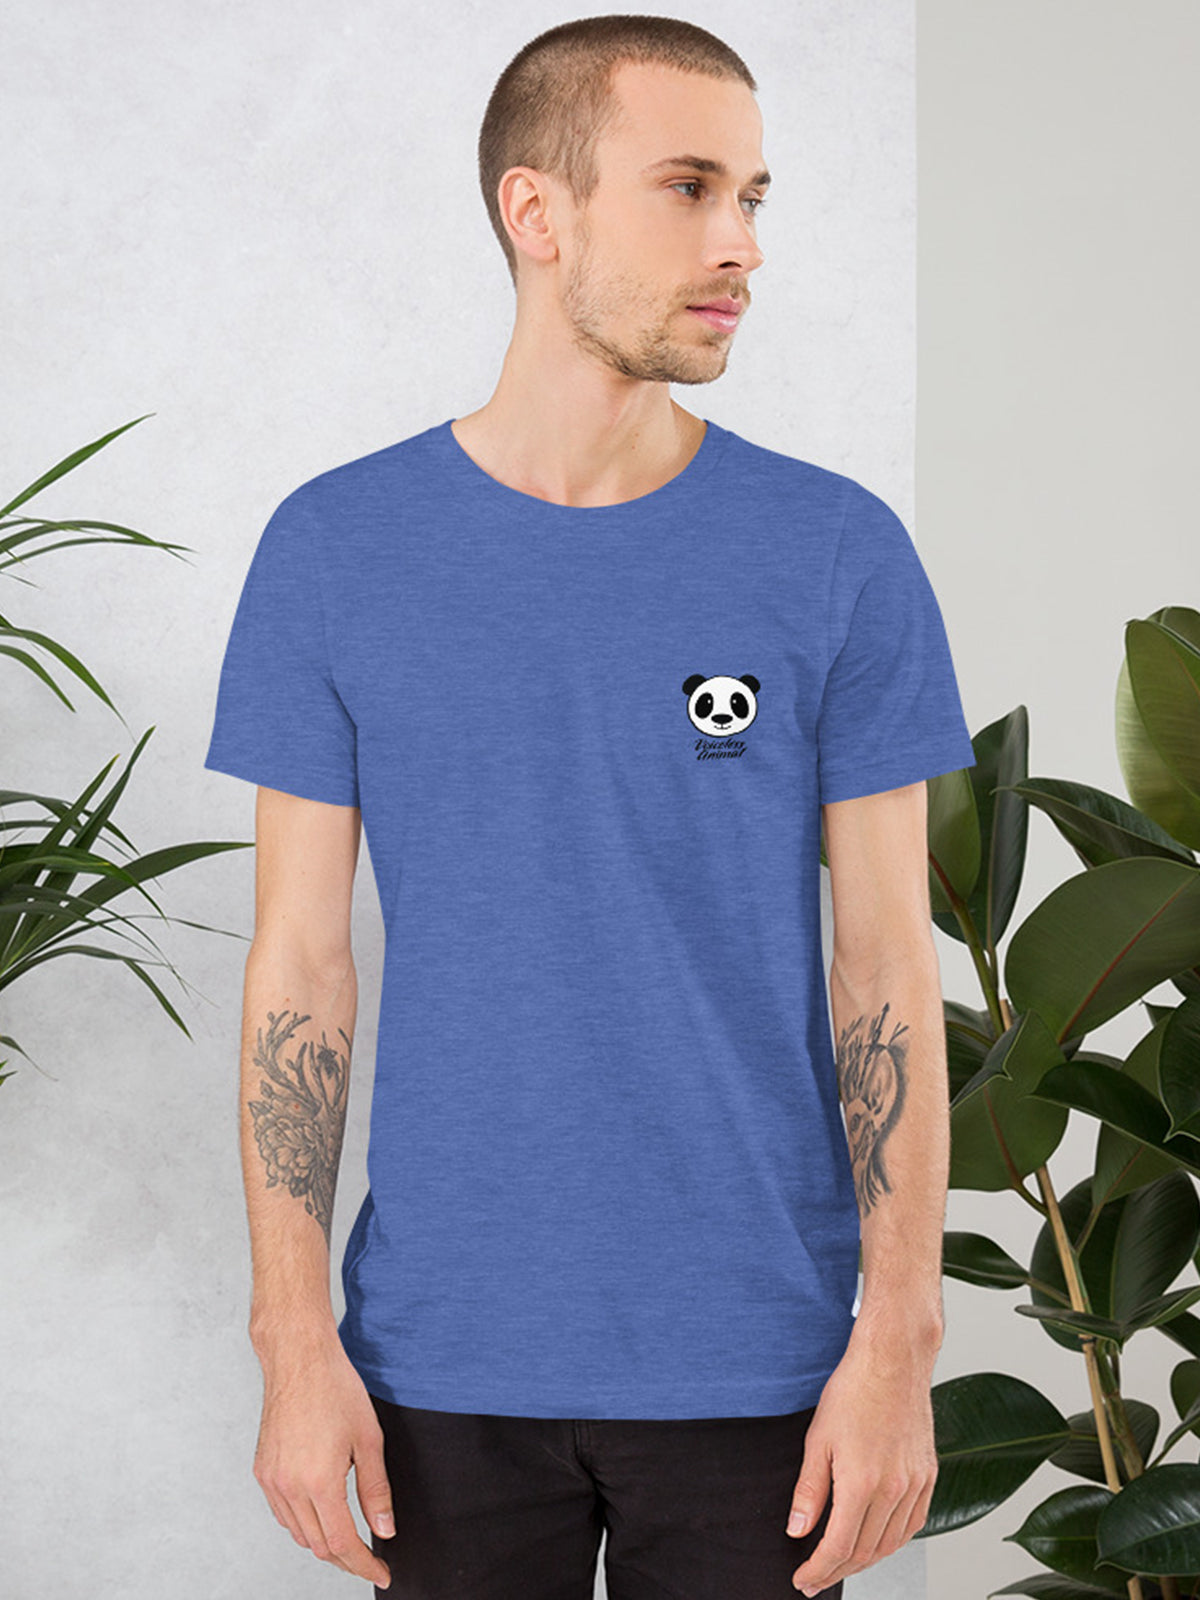 Voiceless Animal Logo -  Premium Blue Unisex t-shirt